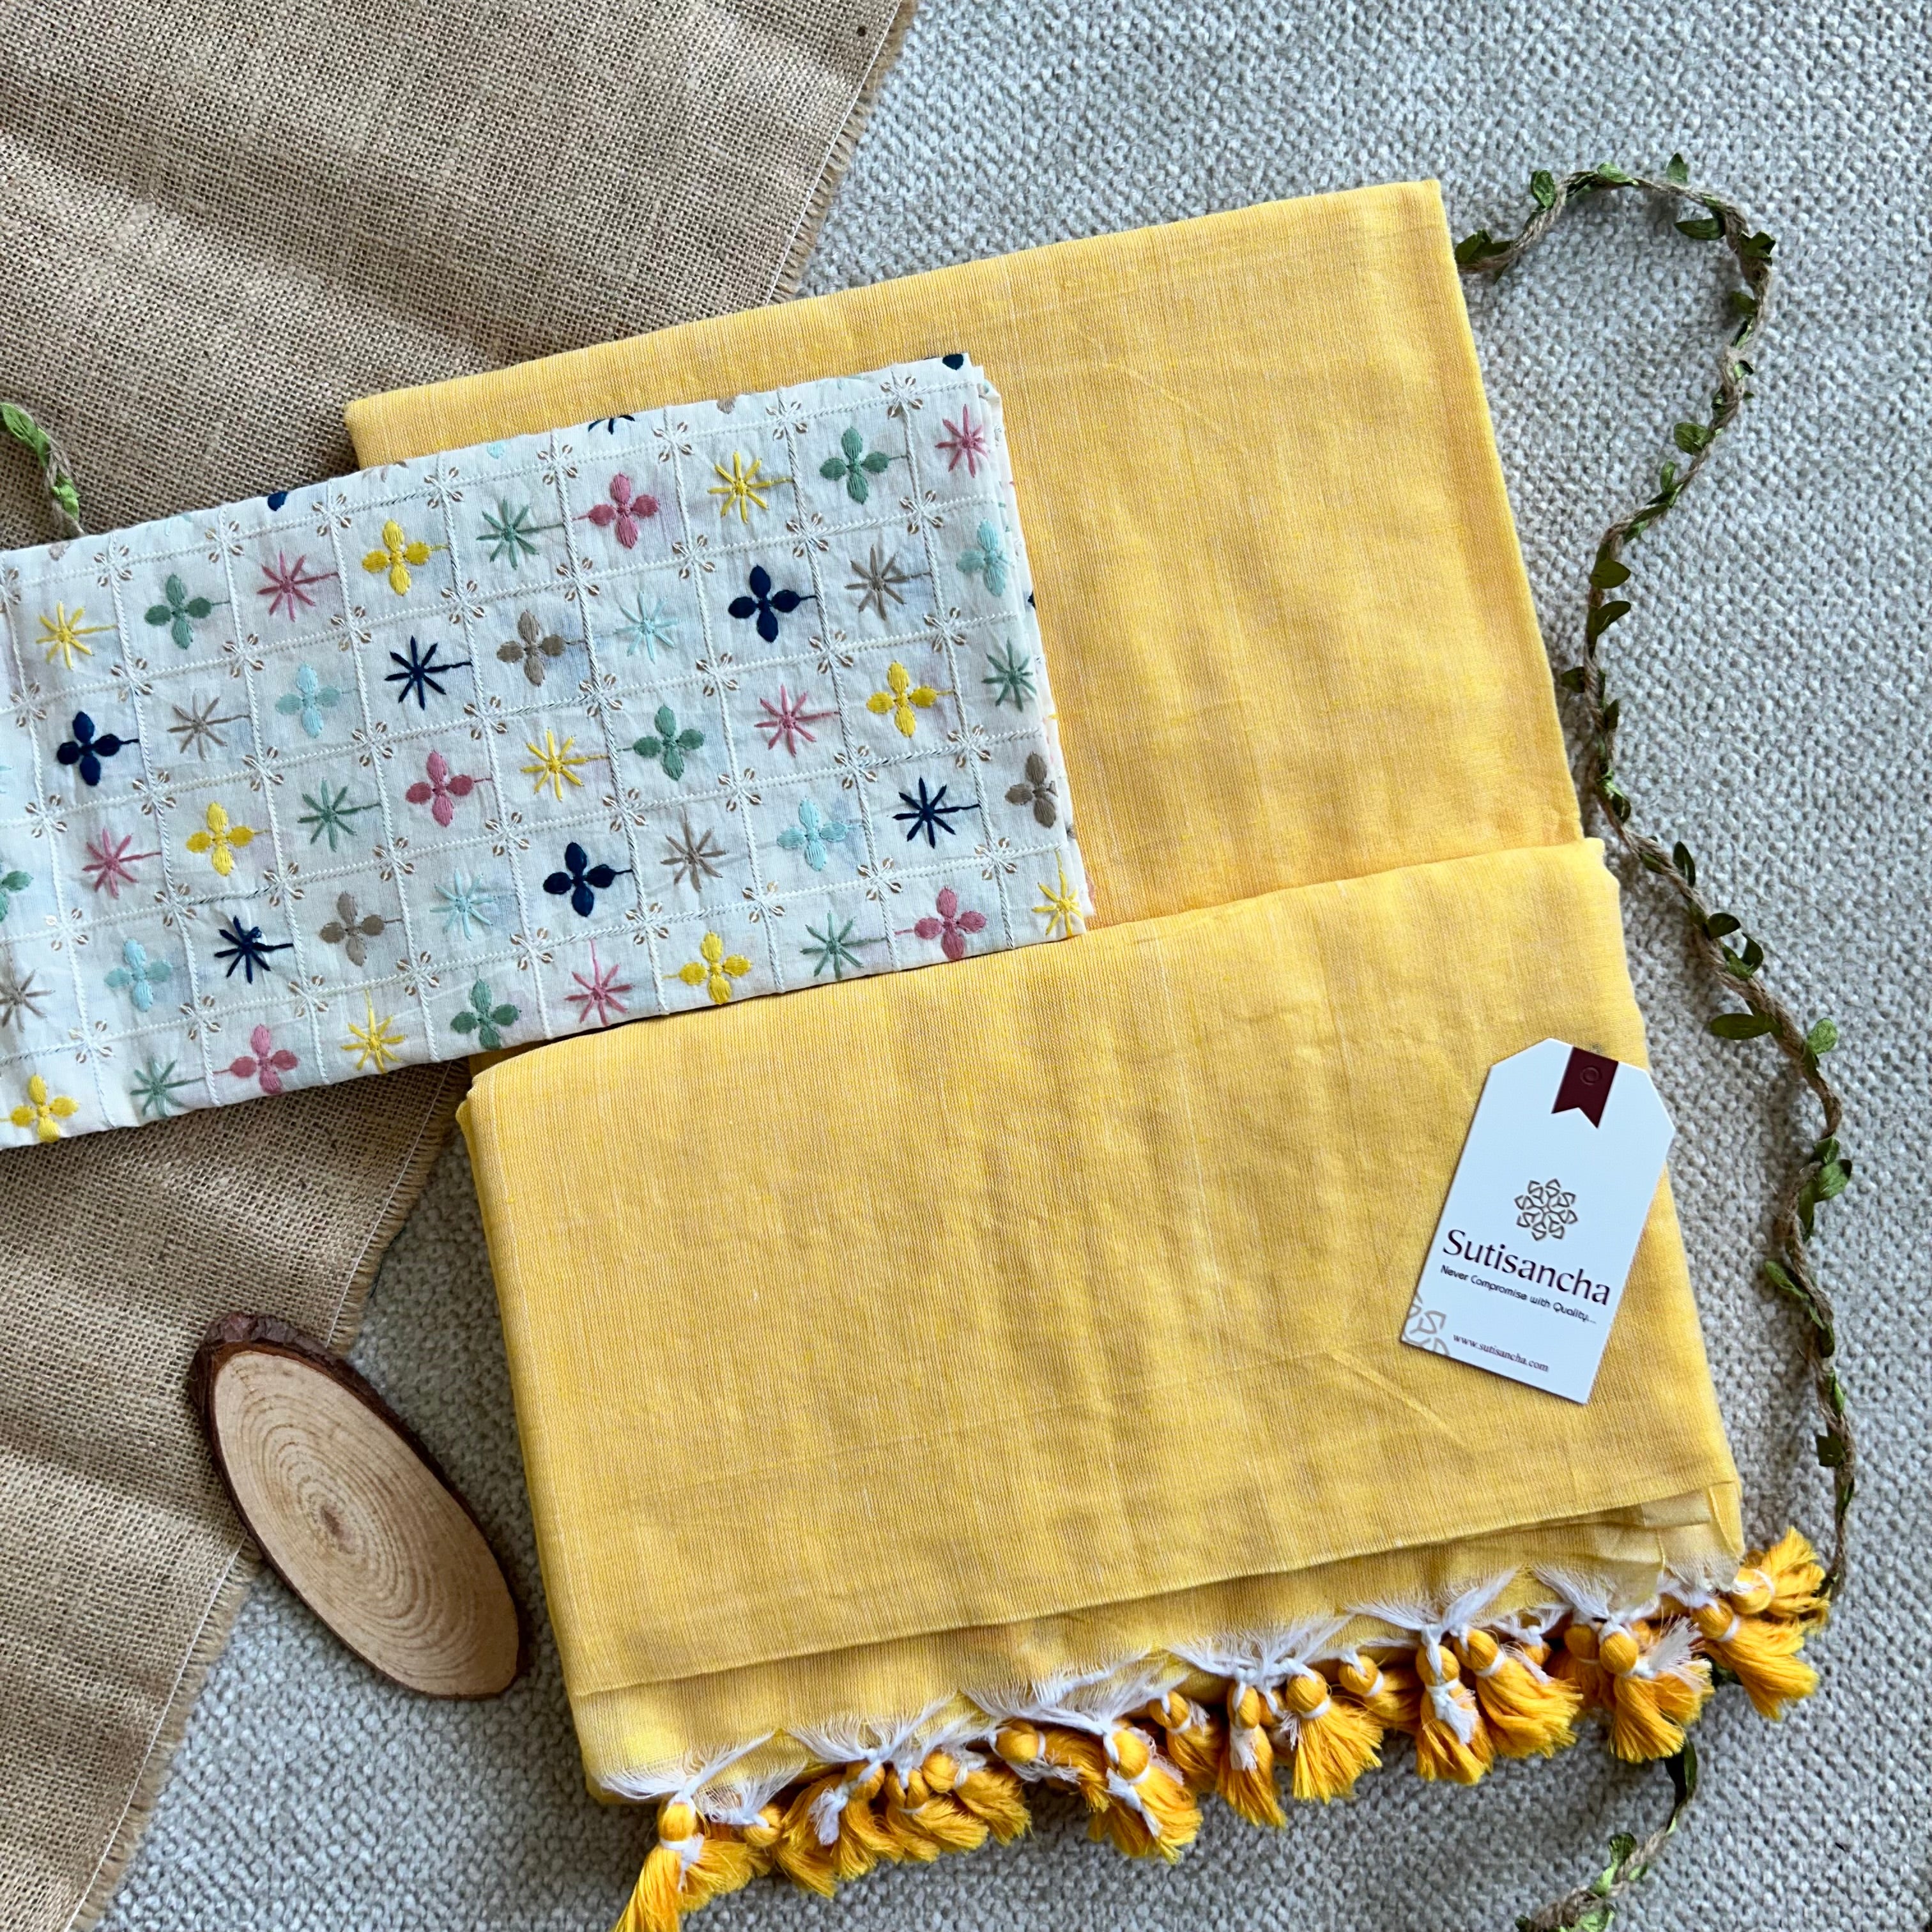 Sutisancha Yellow Cotton Saree designer work Blouse